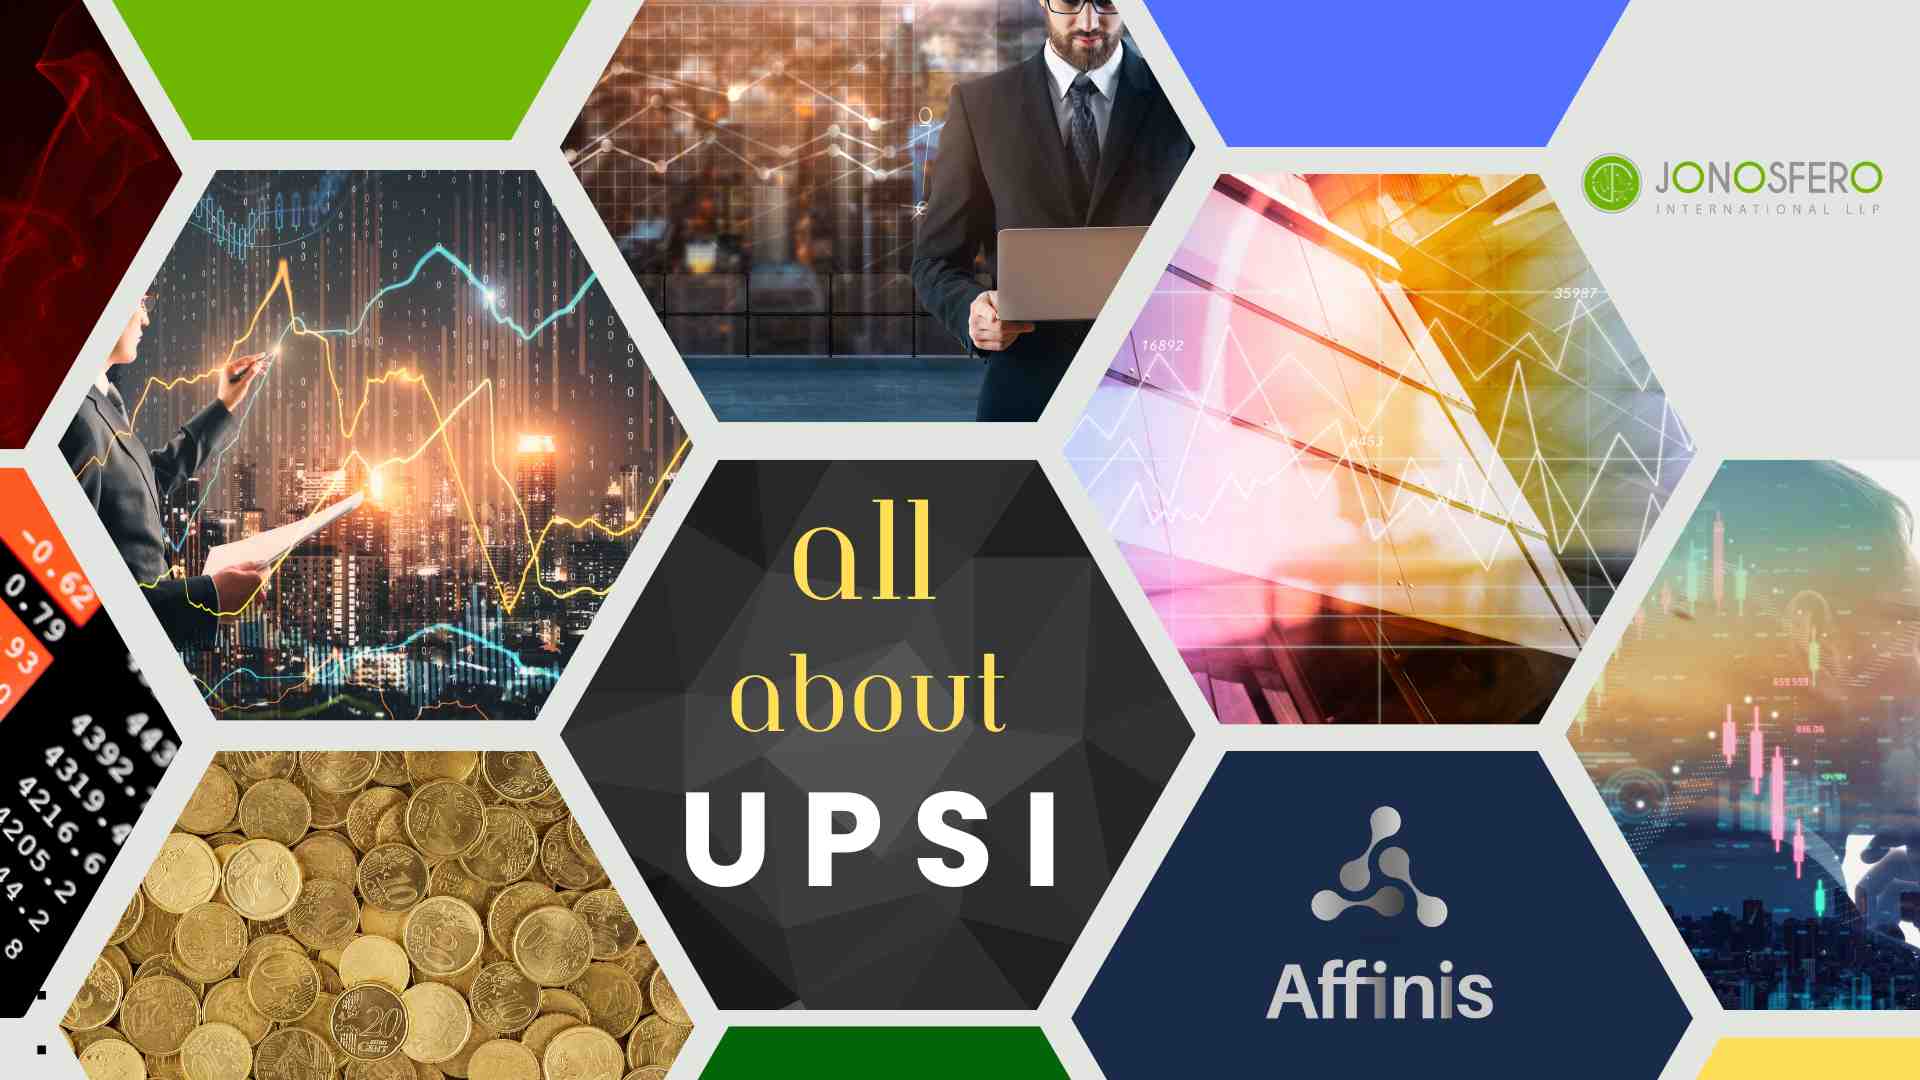 all-about-upsi-regulations-sebi-insider-trading-affinis-jonosfero